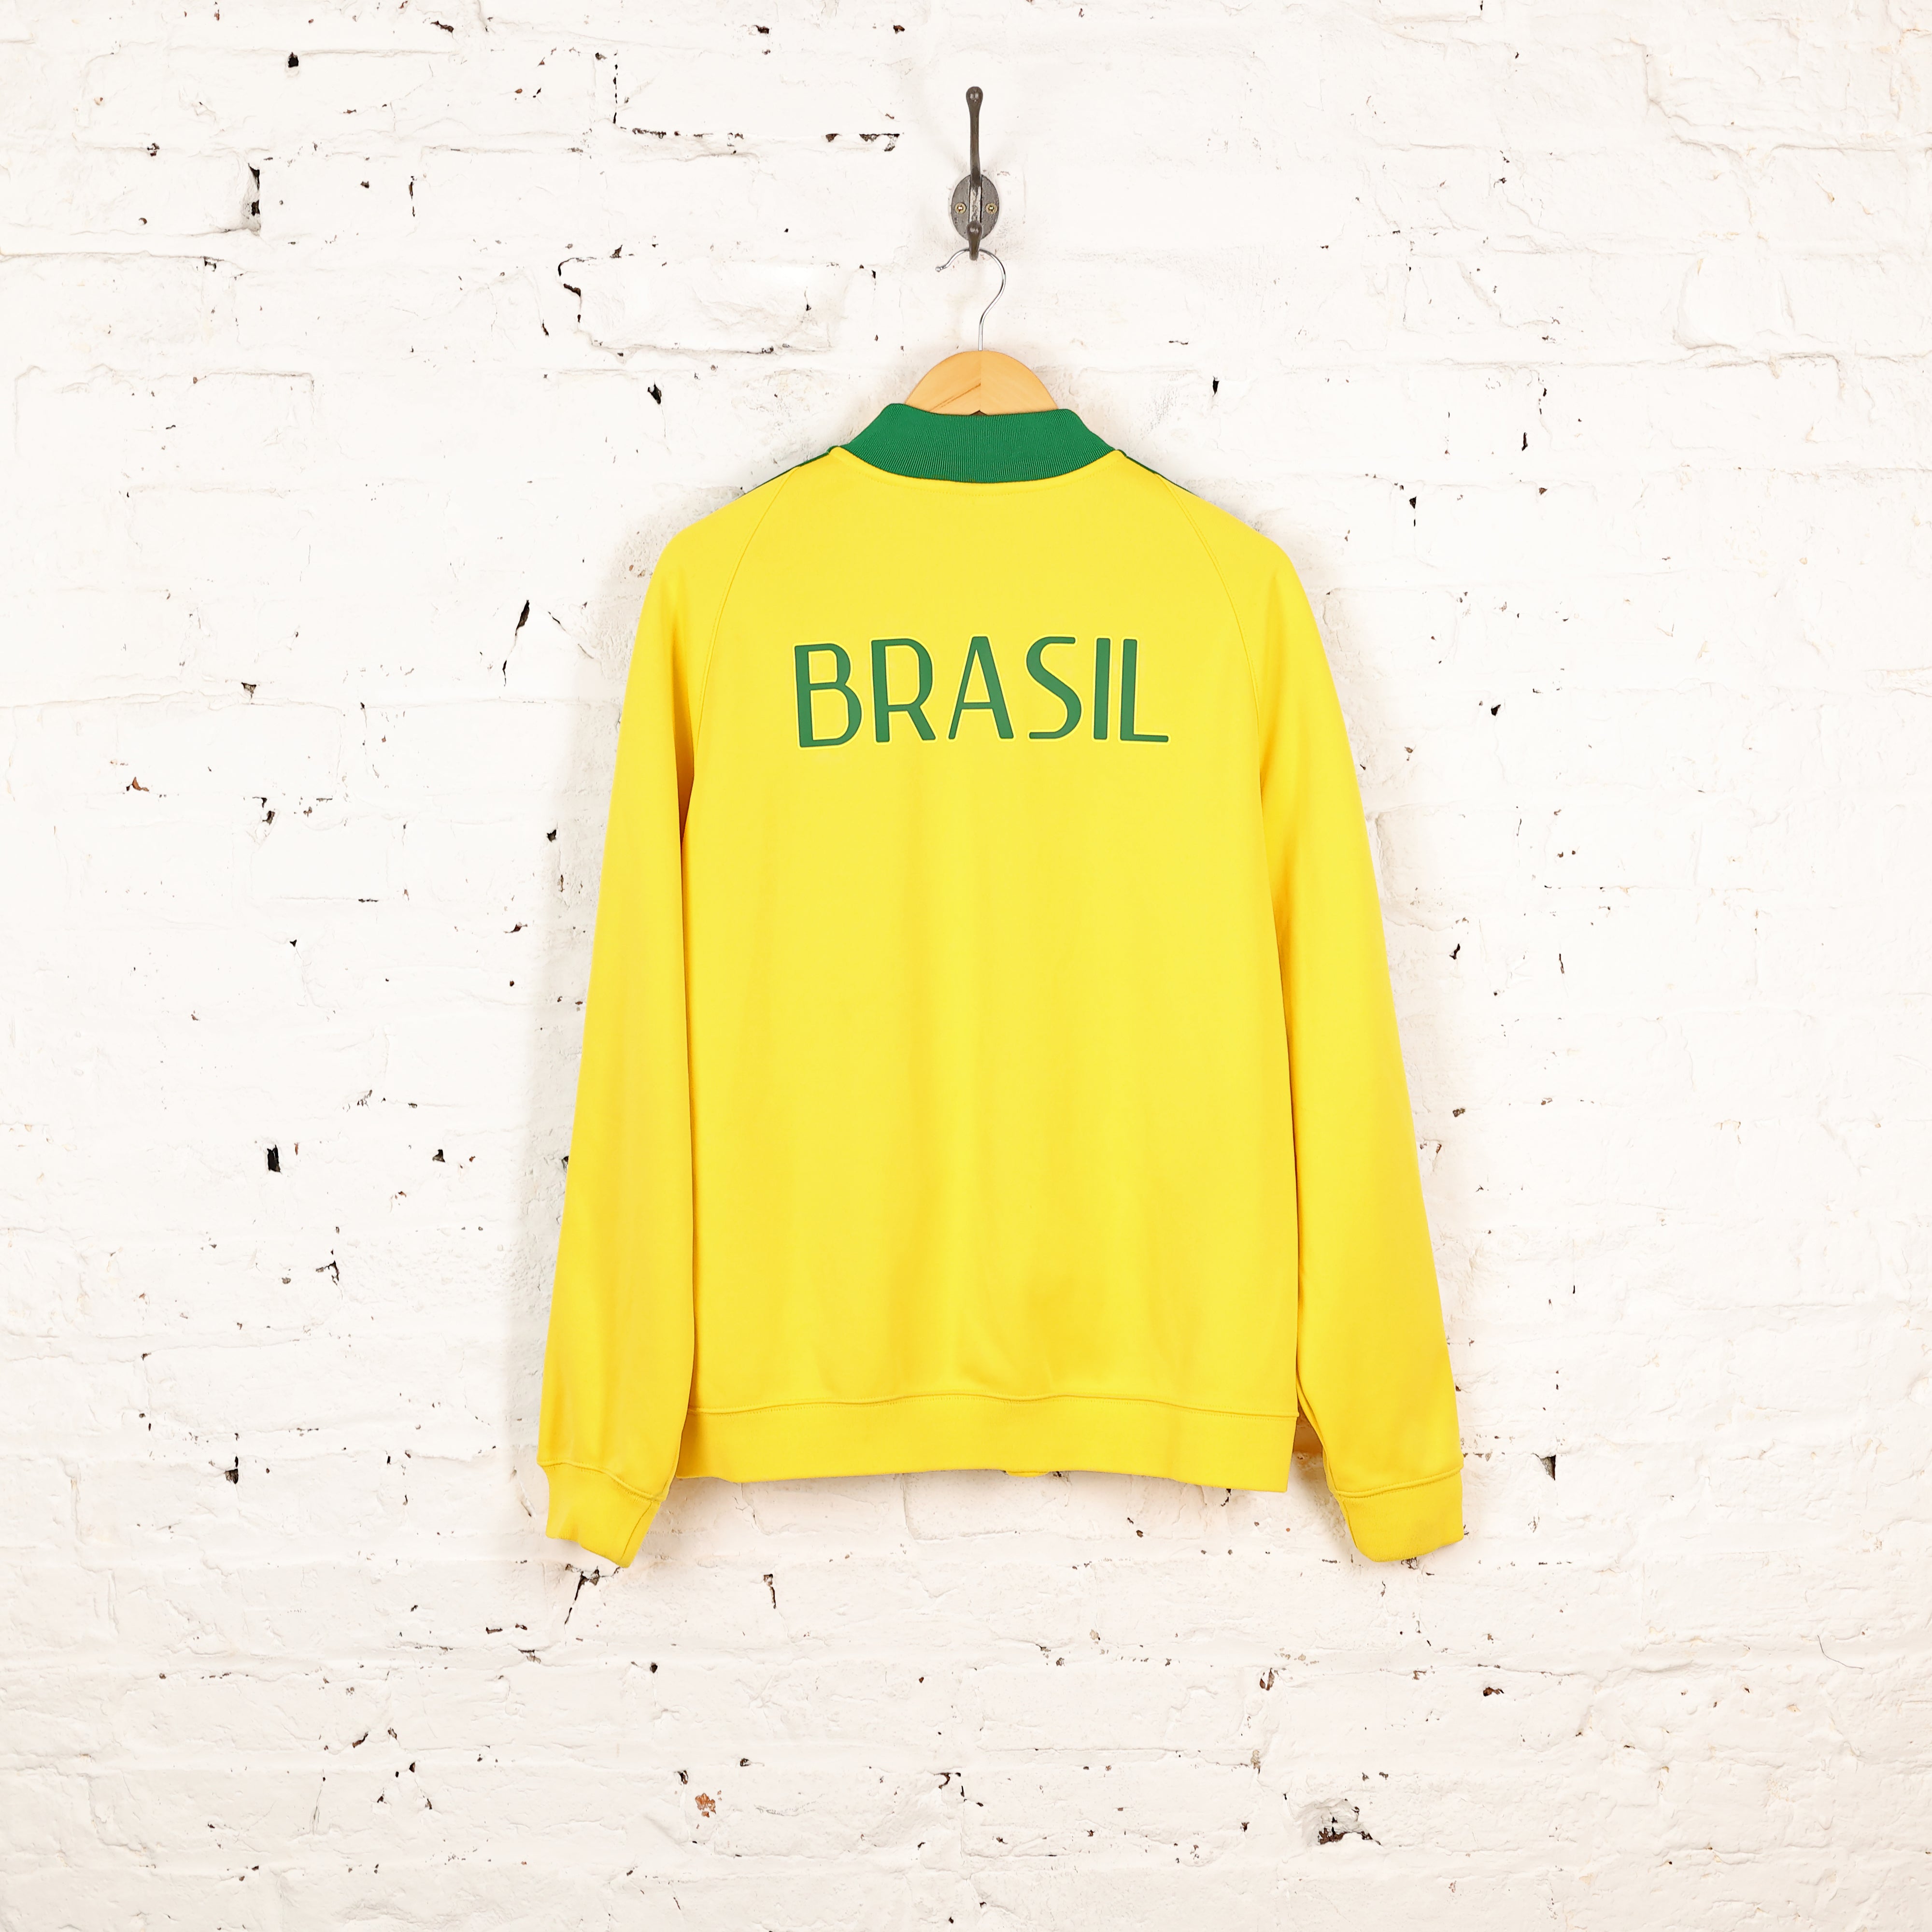 Nike Vintage Nike Brazil Football Soccer Jacket Track Top Rare